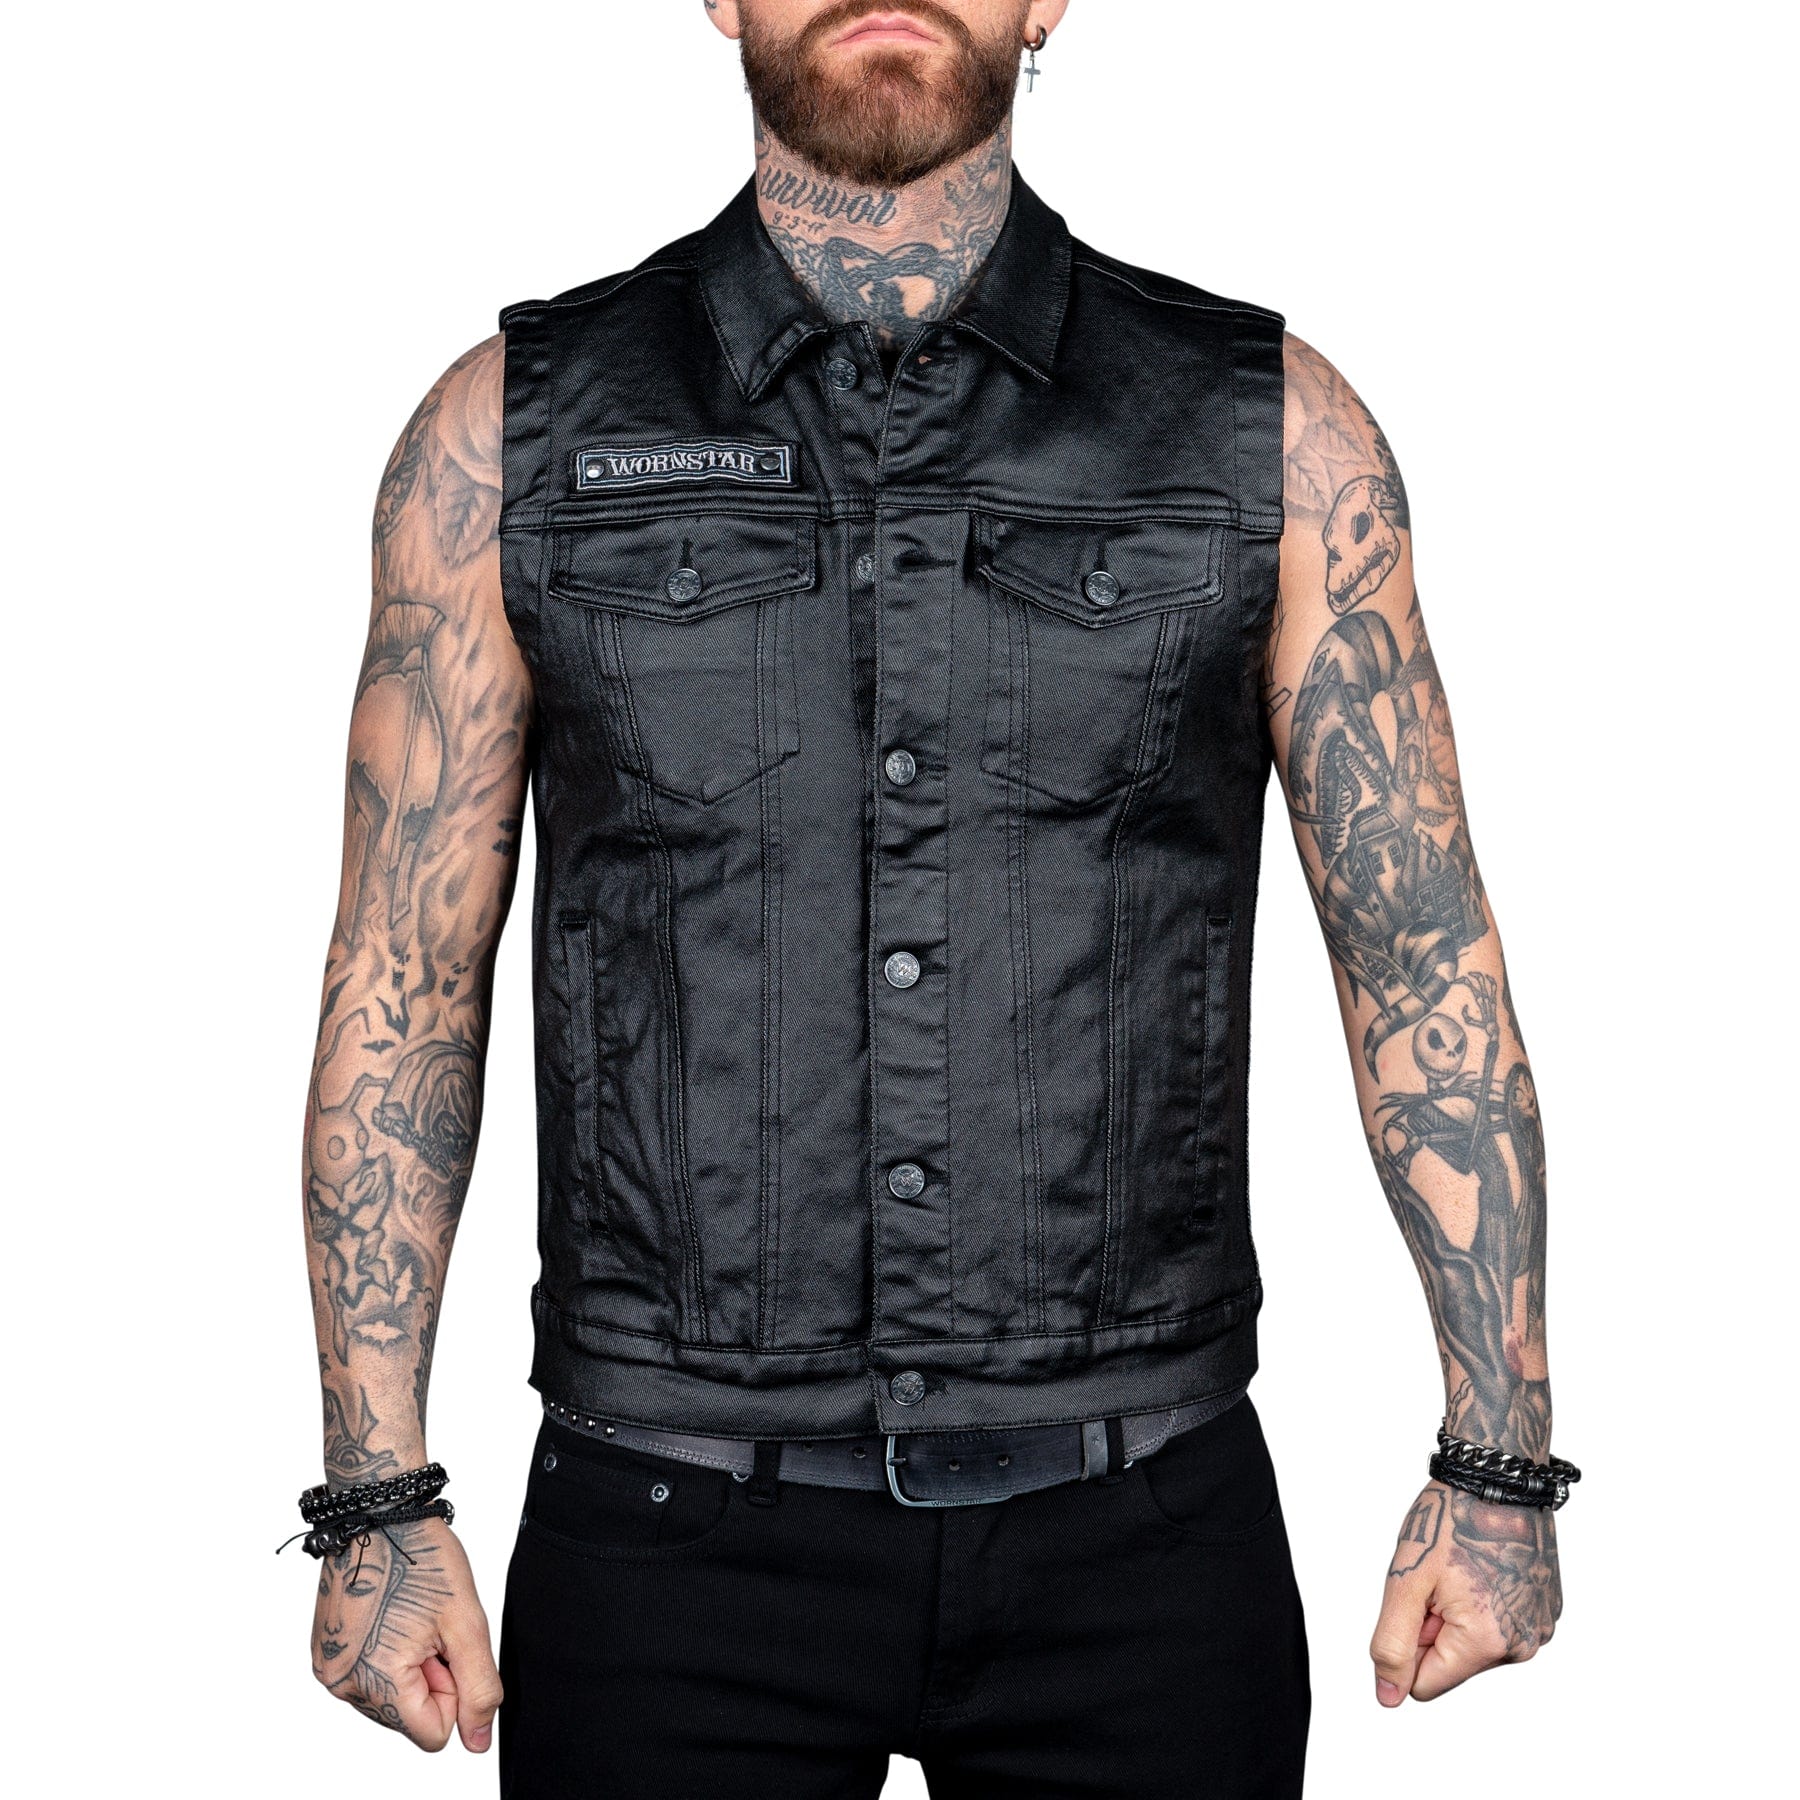 Wornstar Clothing Mens Vest. Idolmaker Waxed Denim Vest- Black